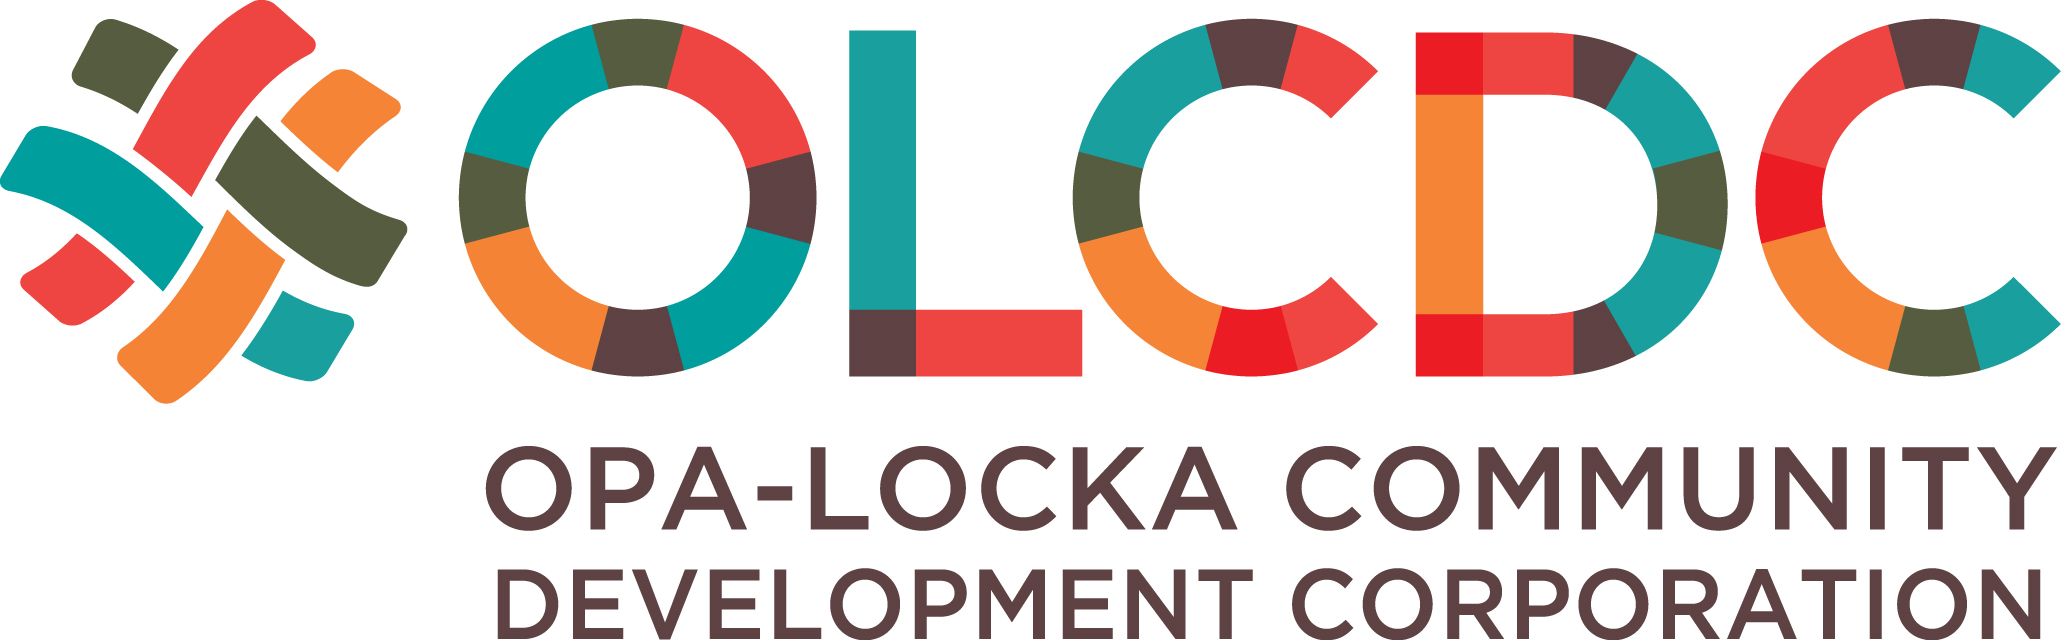 Opa-Locka Community Development Corporation